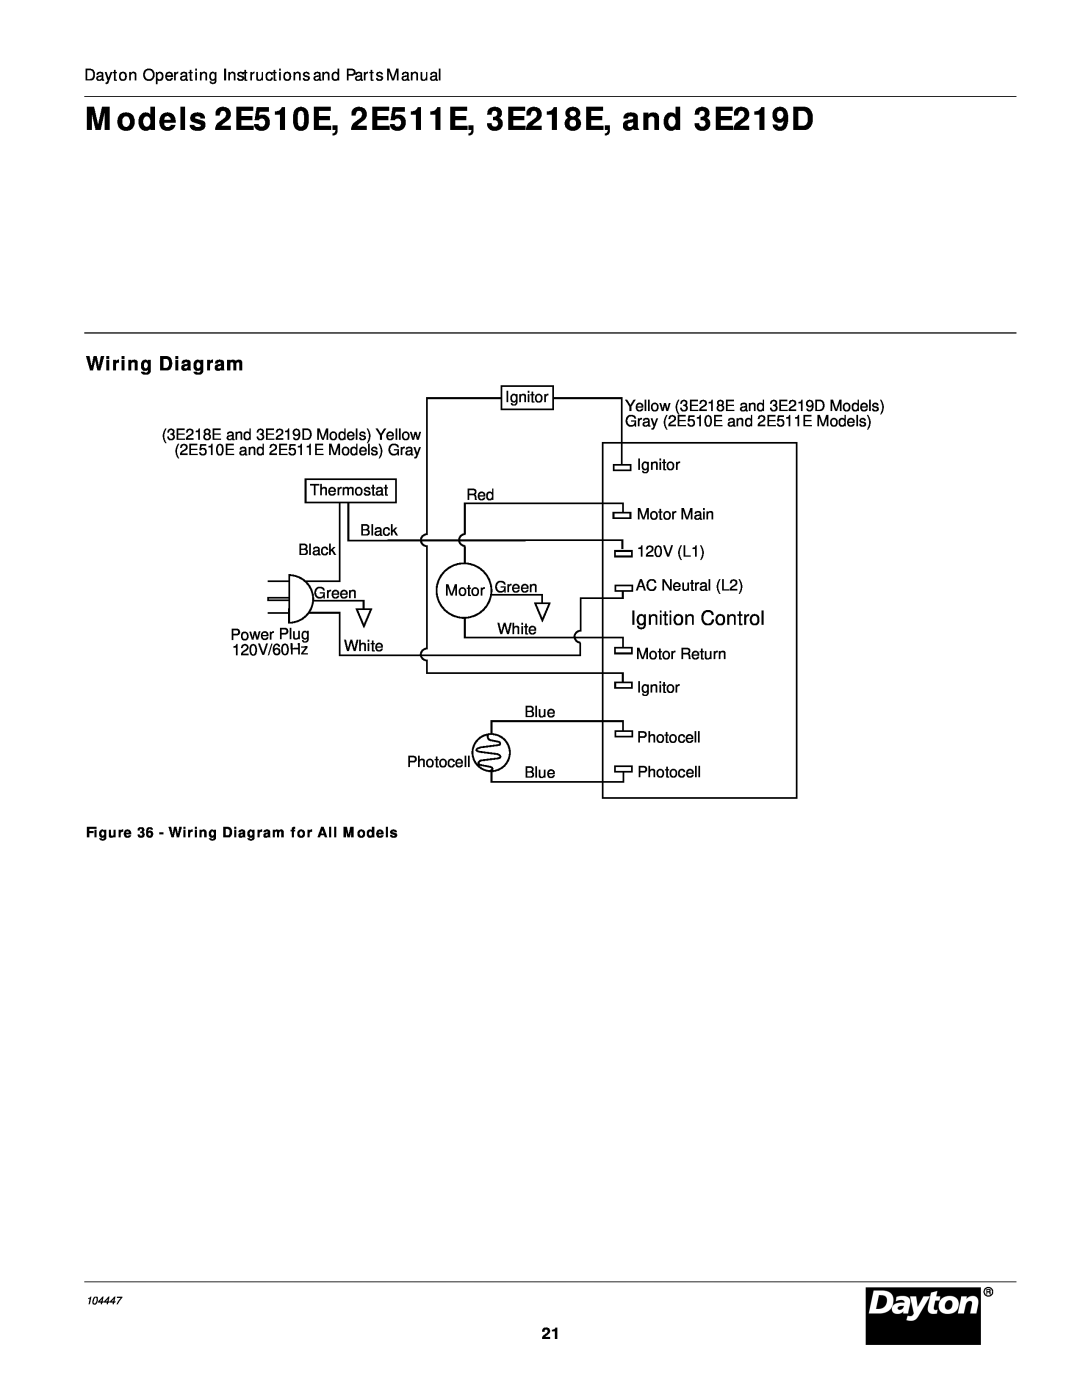 Dayton specifications Wiring Diagram, Models 2E510E, 2E511E, 3E218E, and 3E219D, Ignition Control 